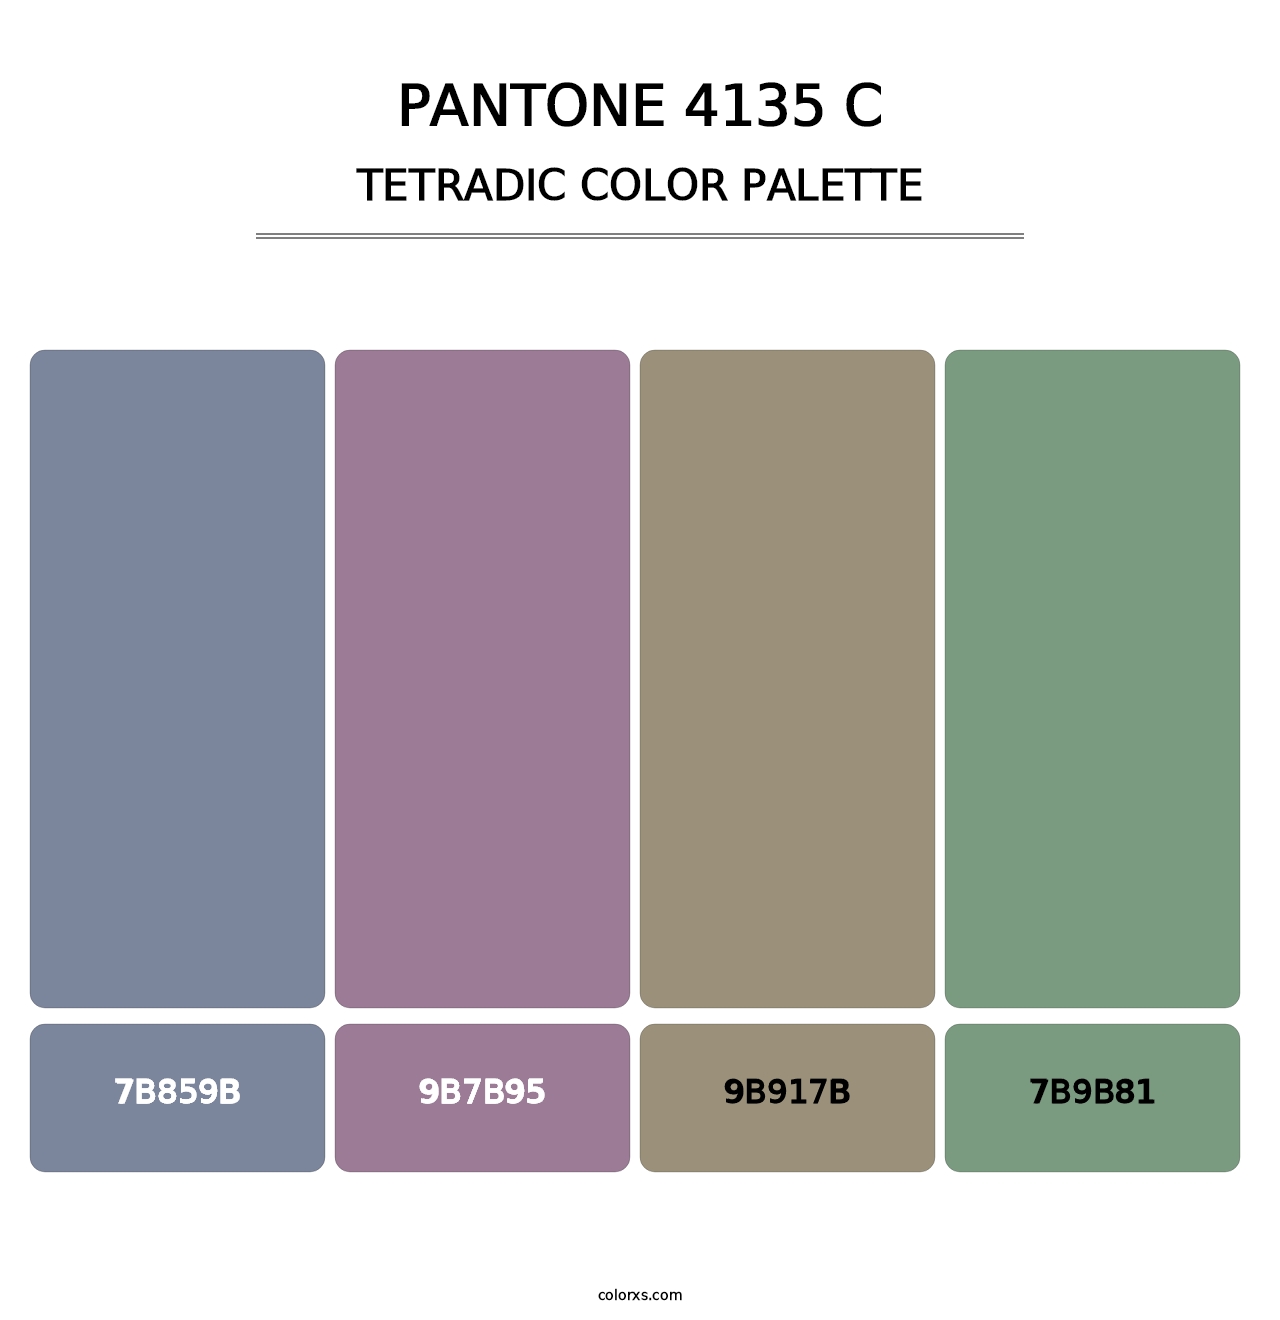 PANTONE 4135 C - Tetradic Color Palette